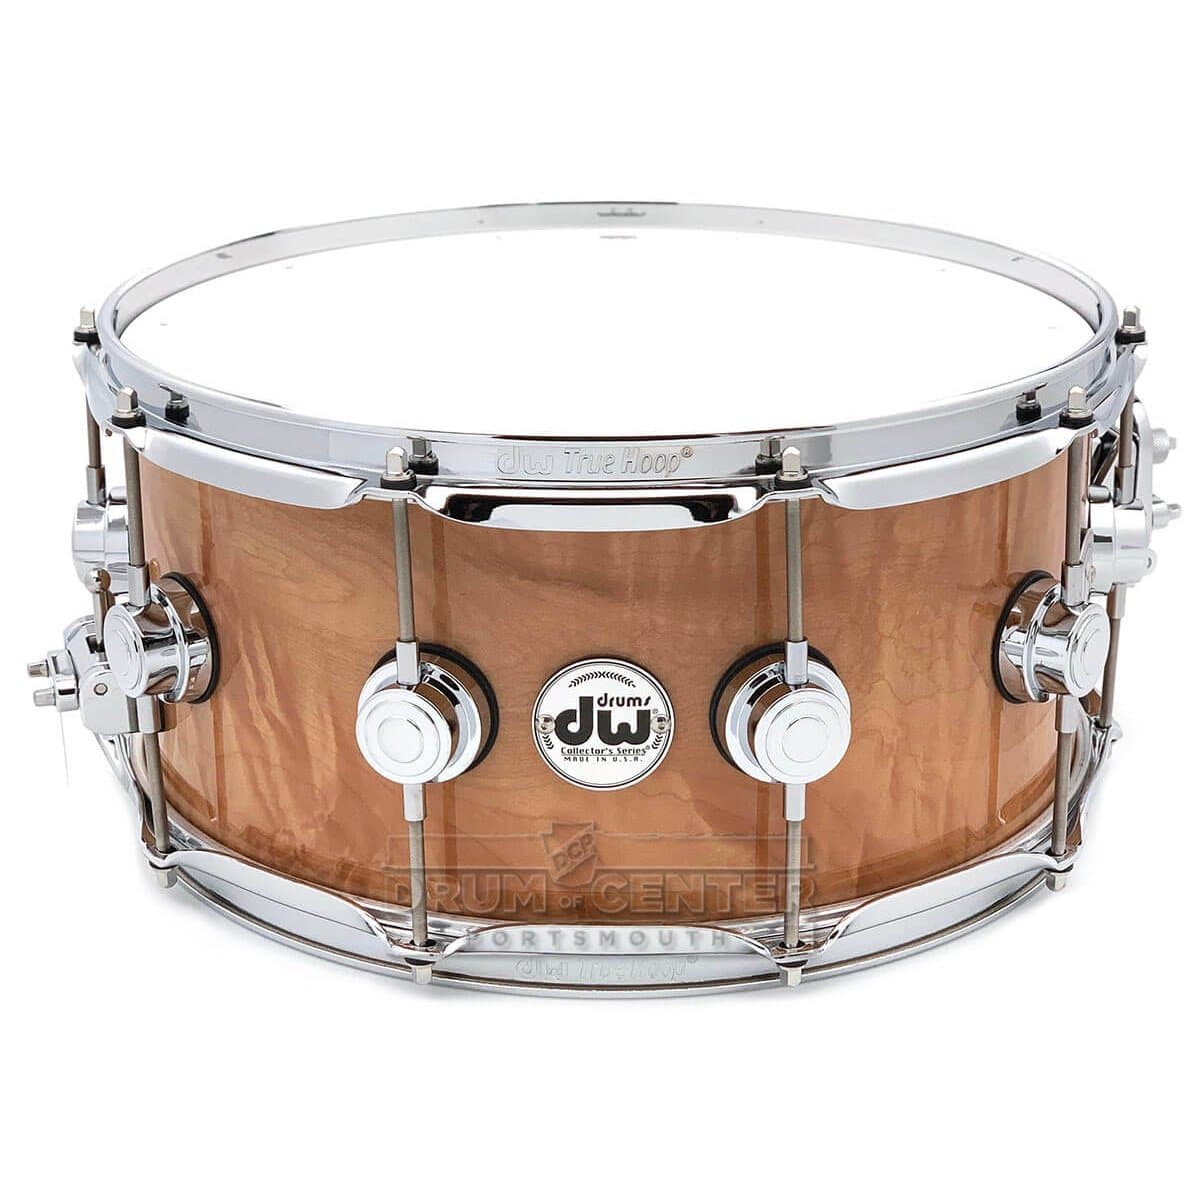 DW Collectors Maple/Purple Core Snare Drum 14x6.5 Natural Super 